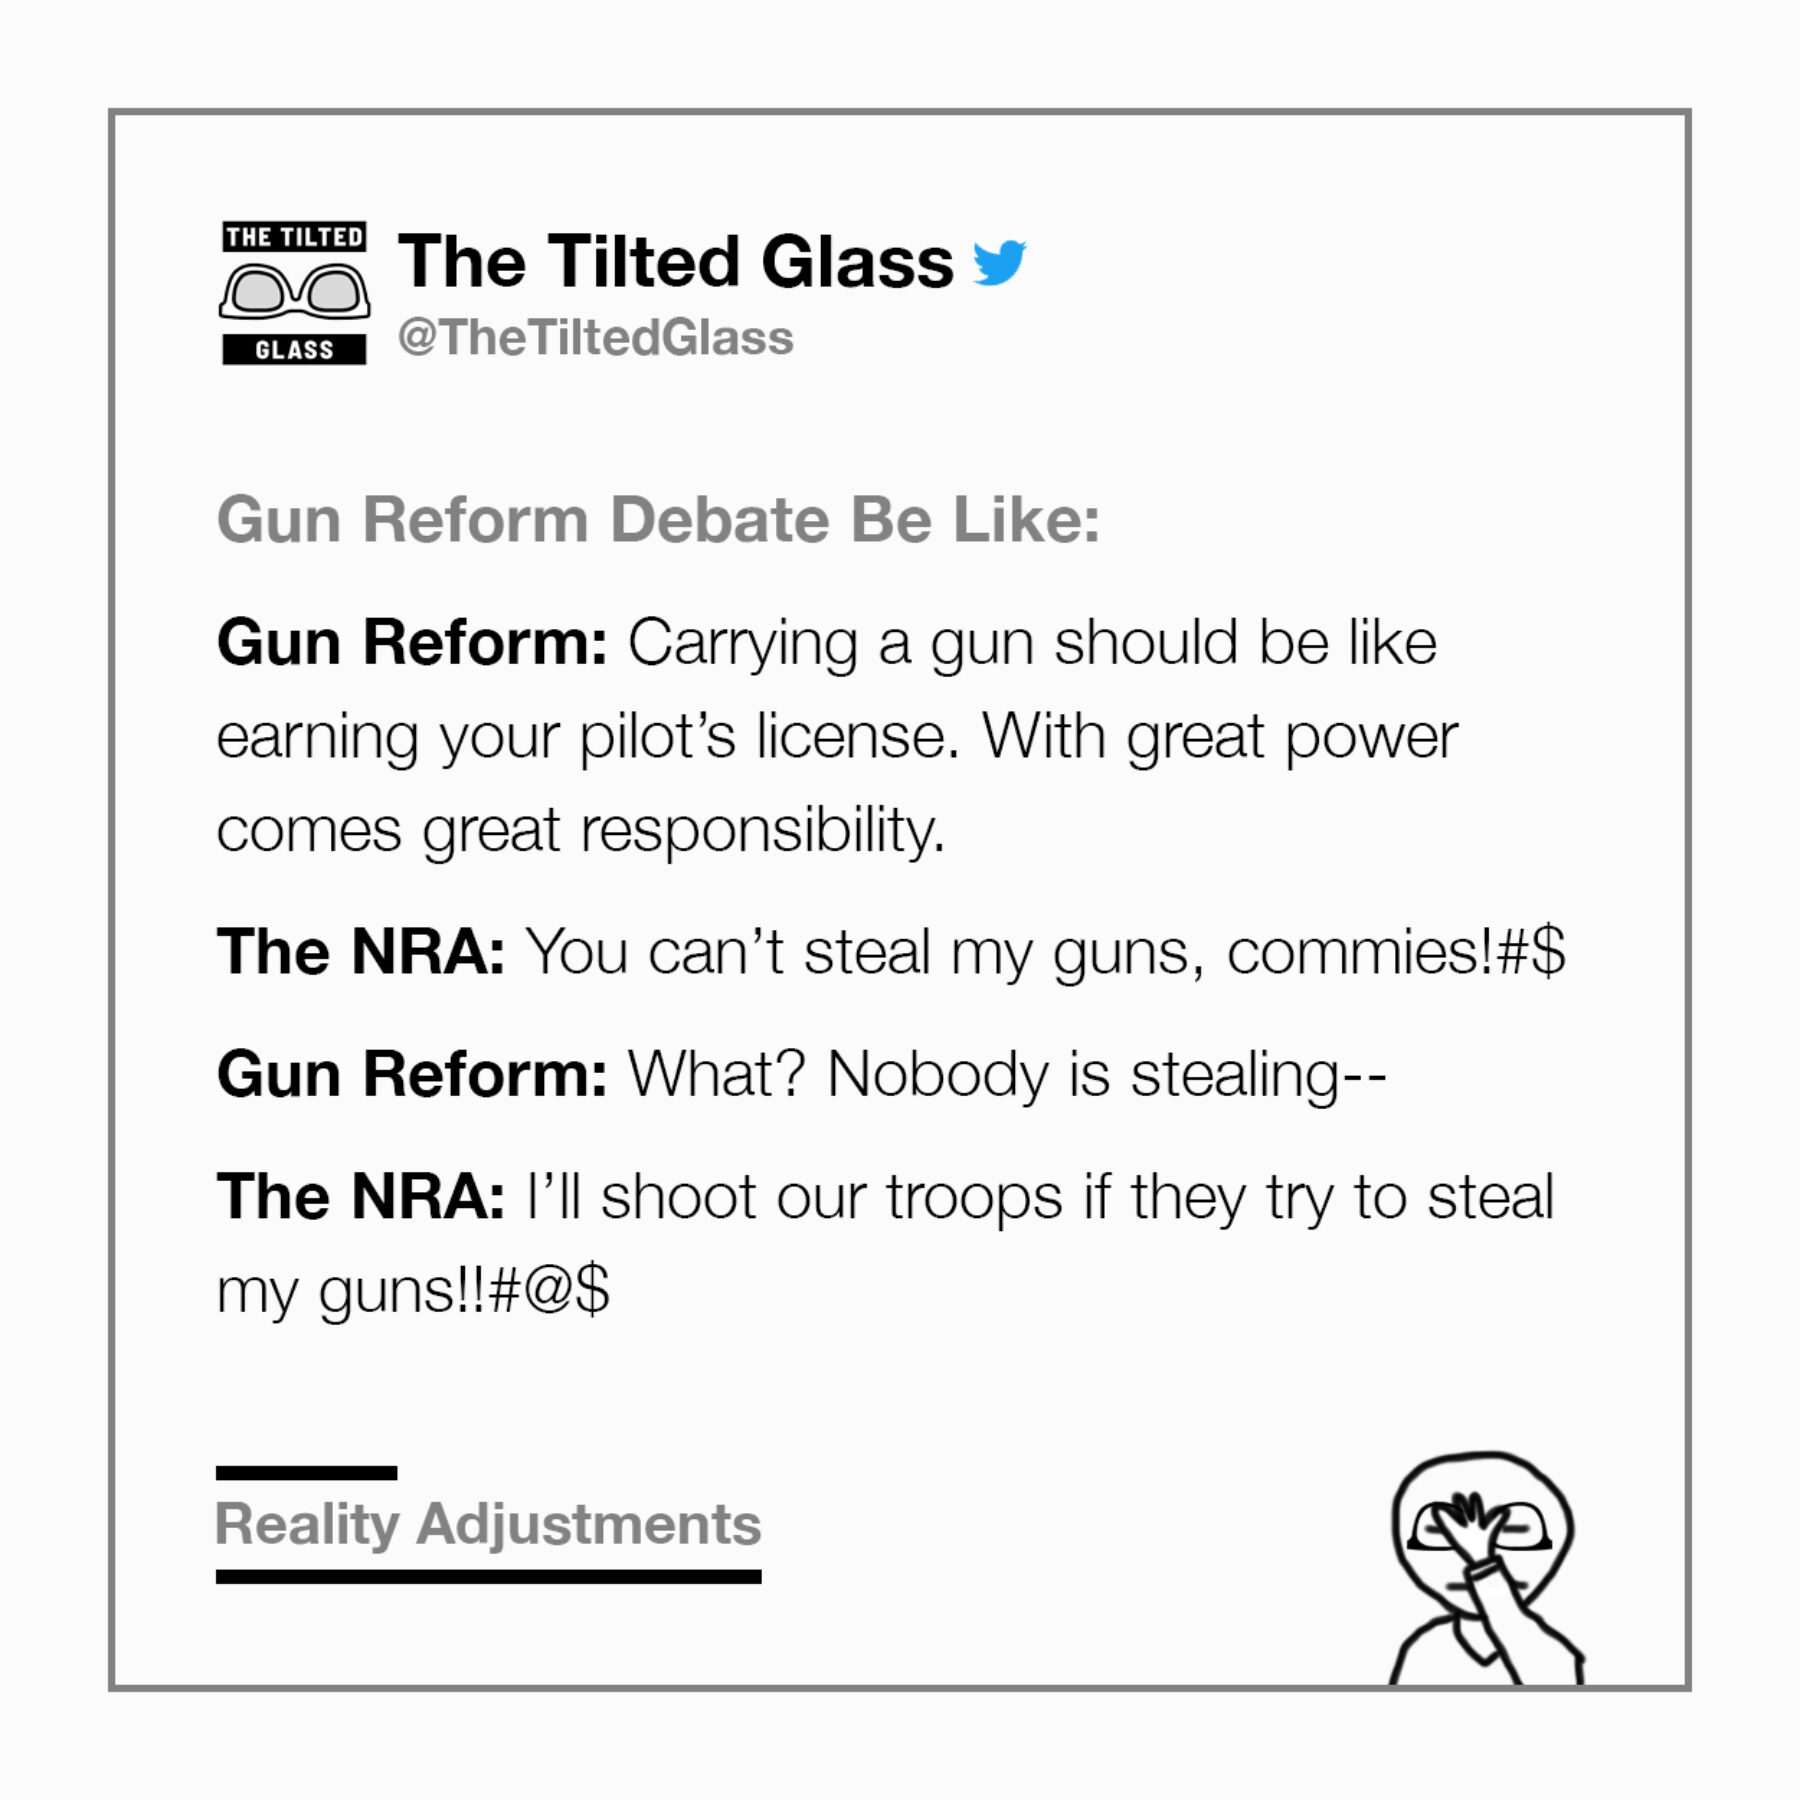 Gun Reform Debate Be Like: